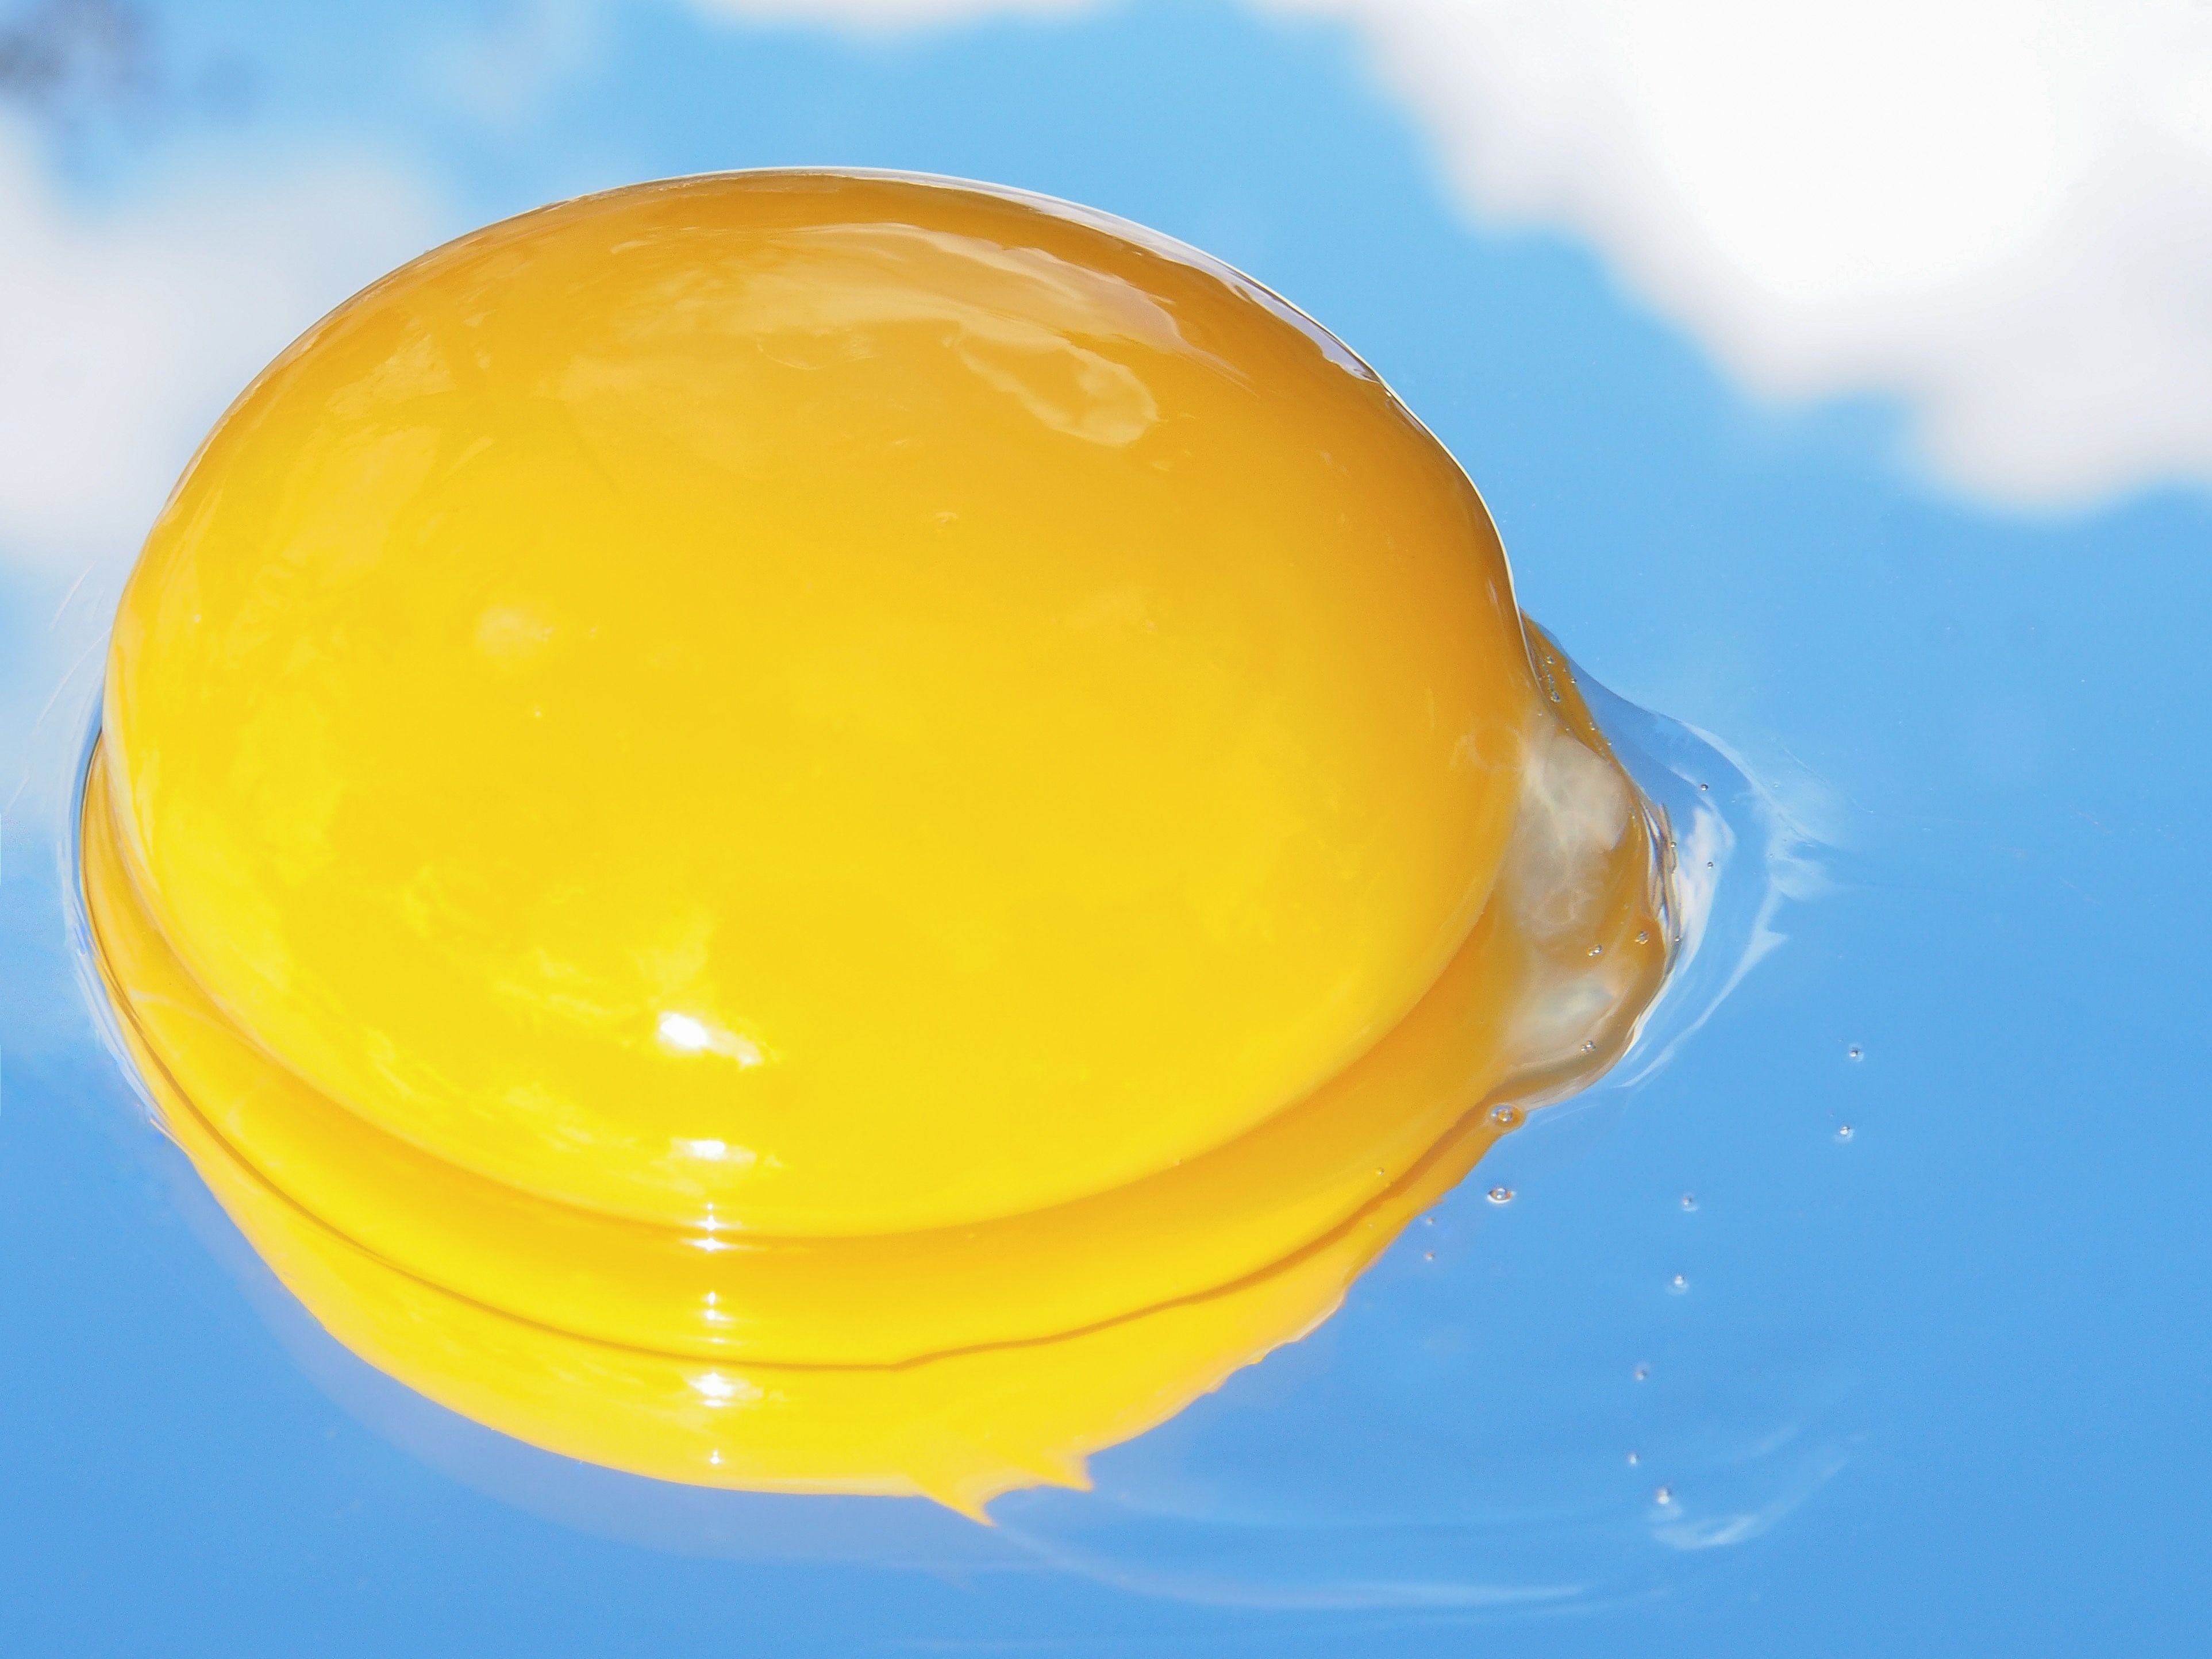 Wallpaper, sky, yellow, mirror, orange, macromondays, ciel, jaune, produce, 7dwf, oeuf, mirroir, egg yolk 3849x2887